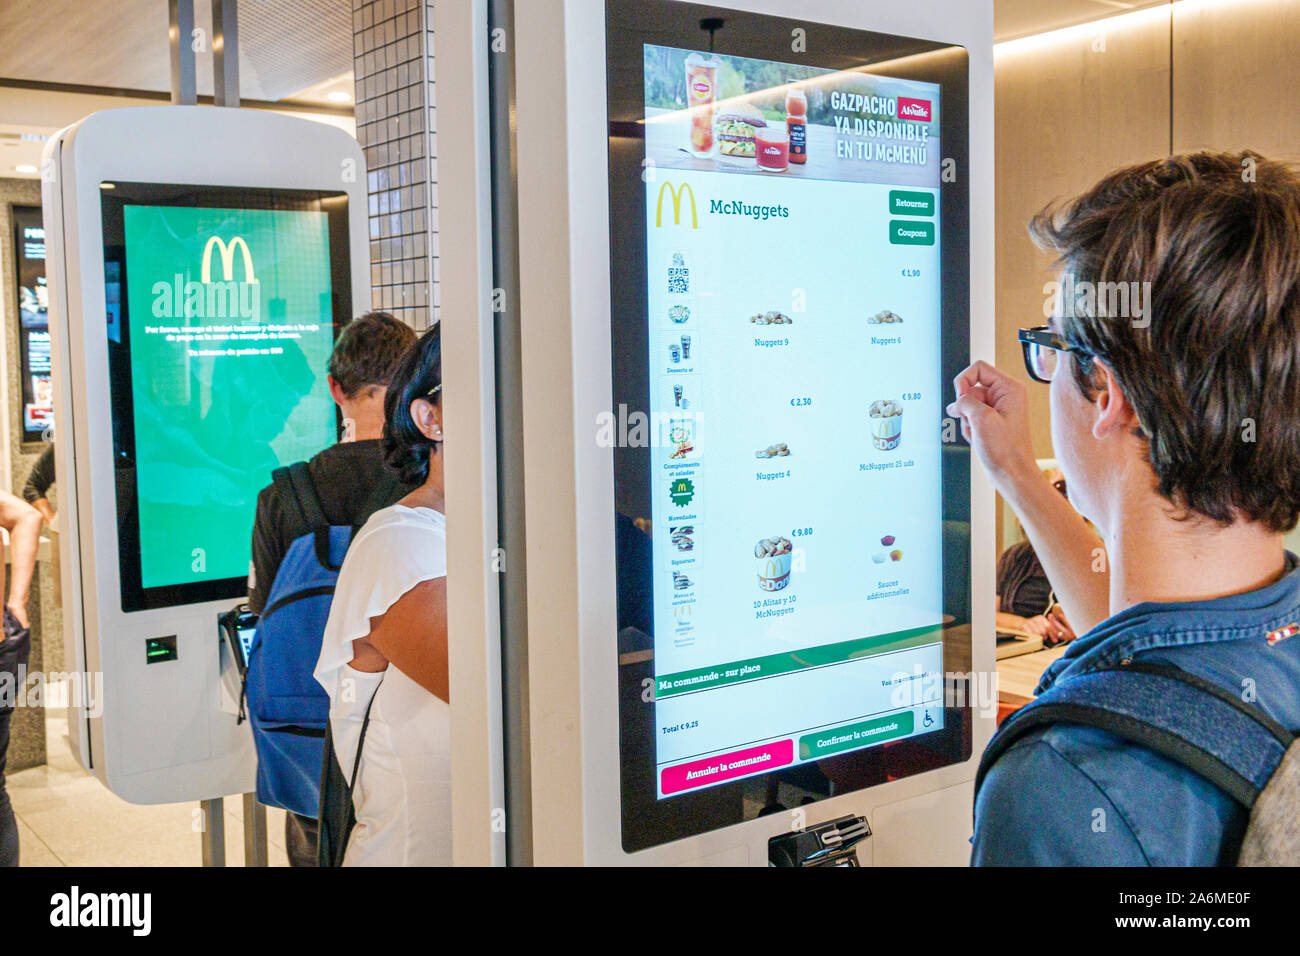 Barcelona Spain,Catalonia Plaza de Francesc Macia,McDonald's, restaurant,fast food,inside,touch screen self-service ordering kiosk,boy,teen,ES19090405 Stock Photo